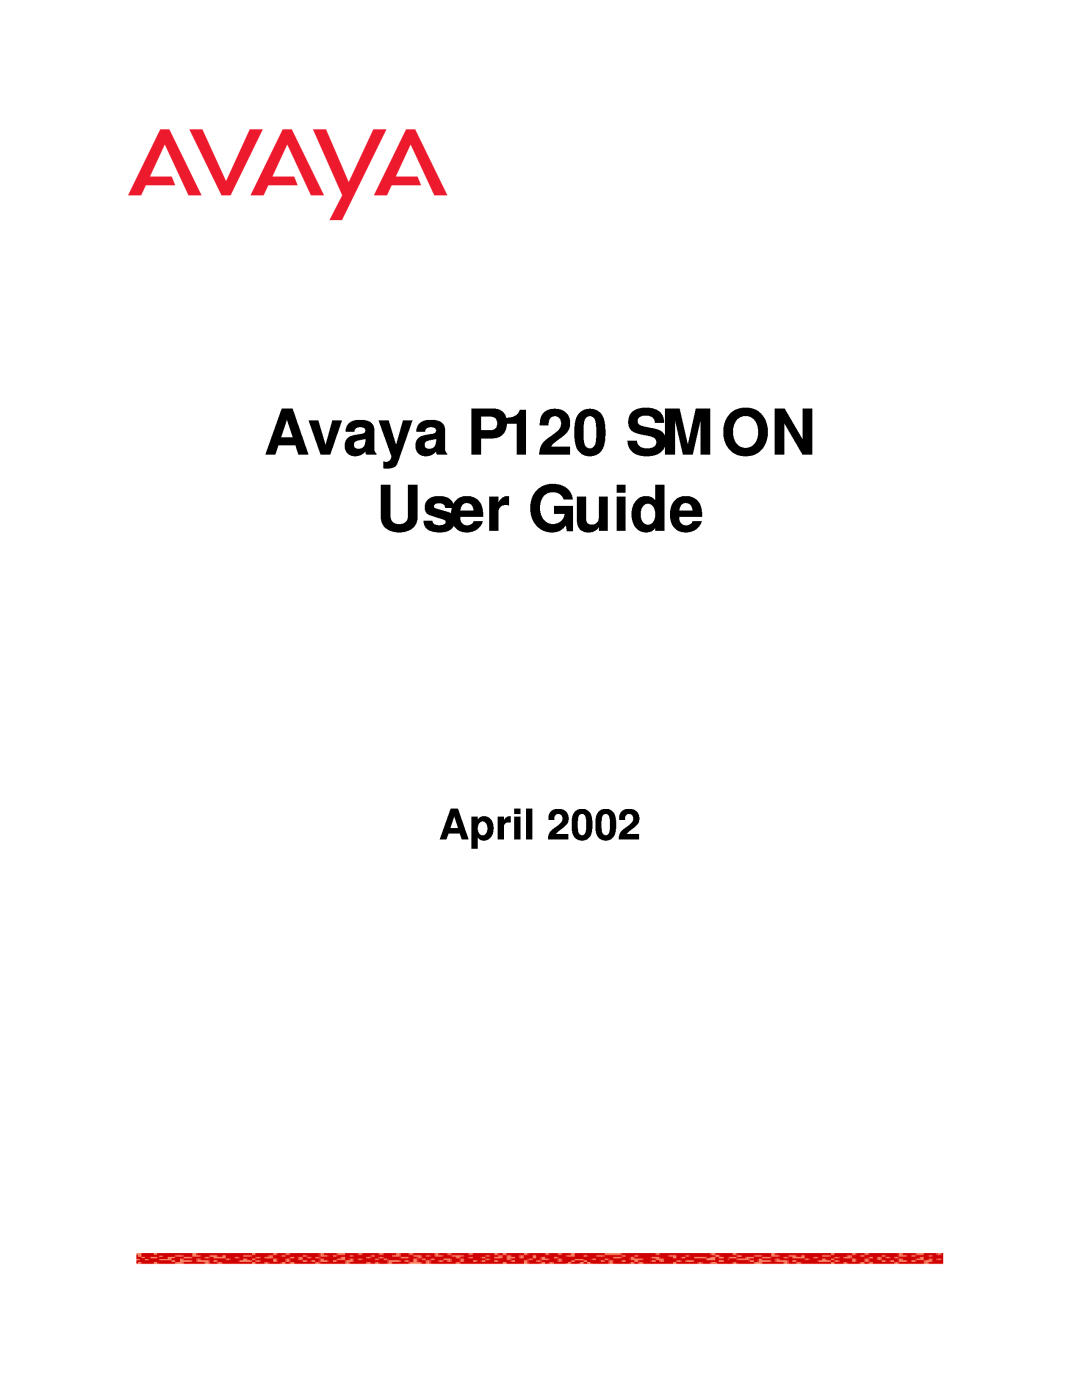 Avaya manual Avaya P120 SMON User Guide, April 